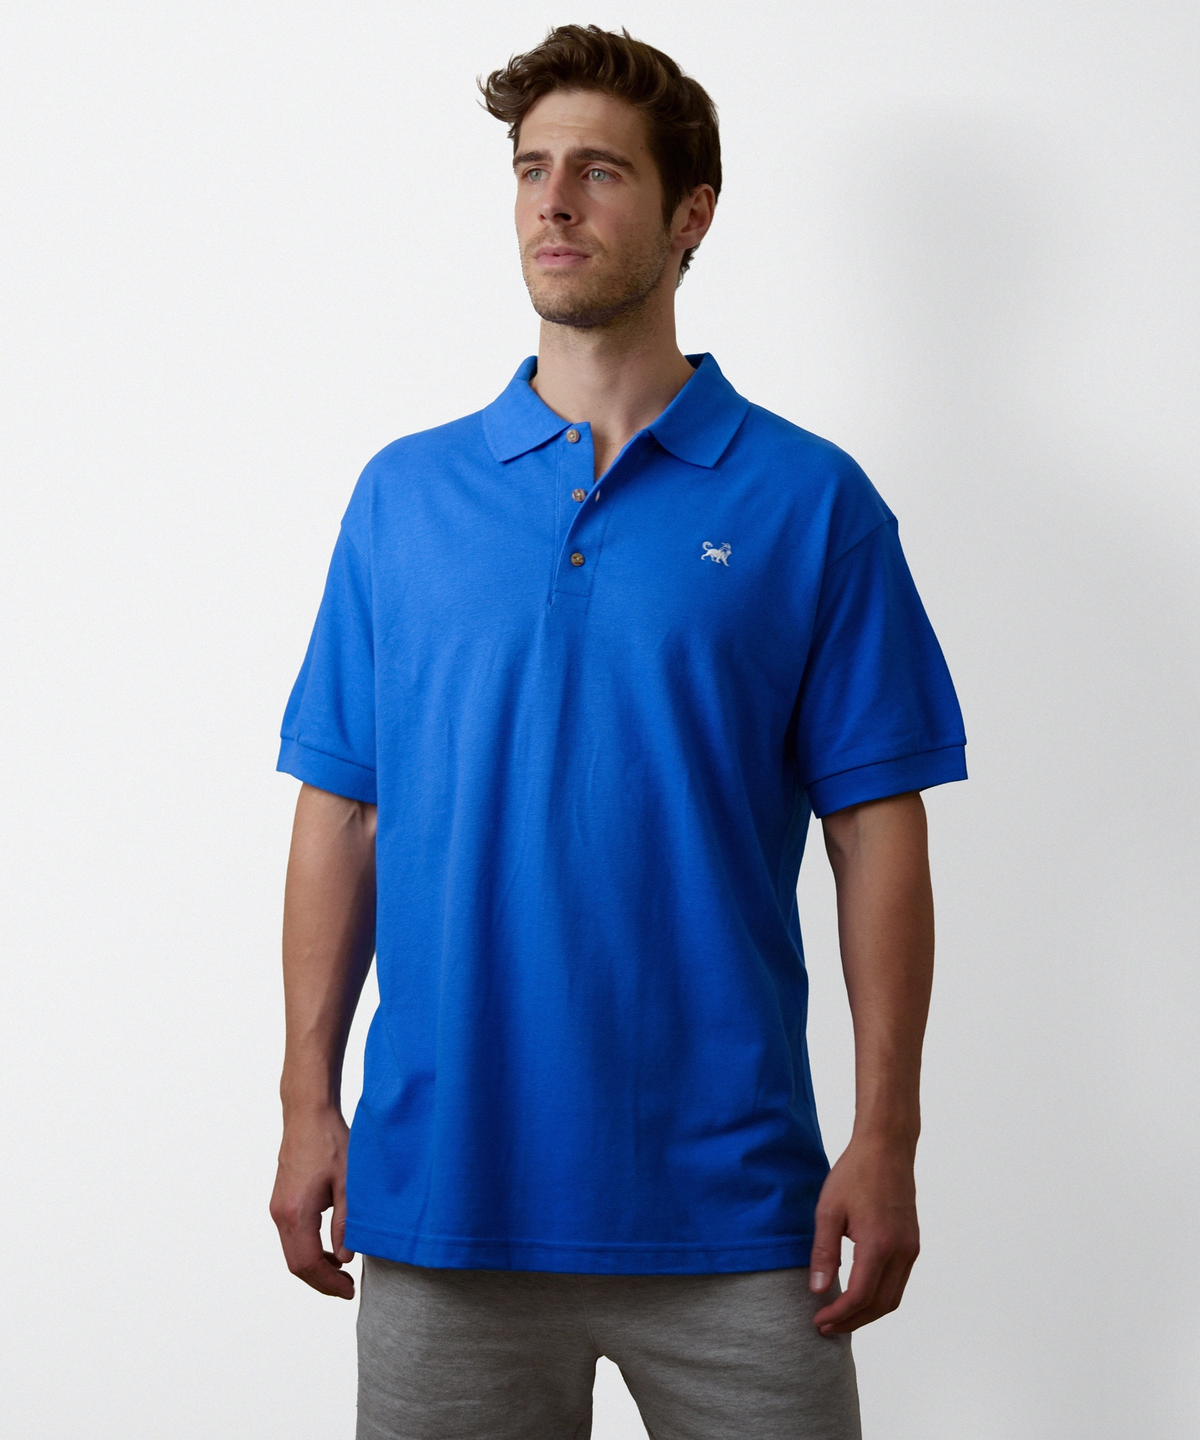 Signature Polo Shirt for Men (Royal Blue)